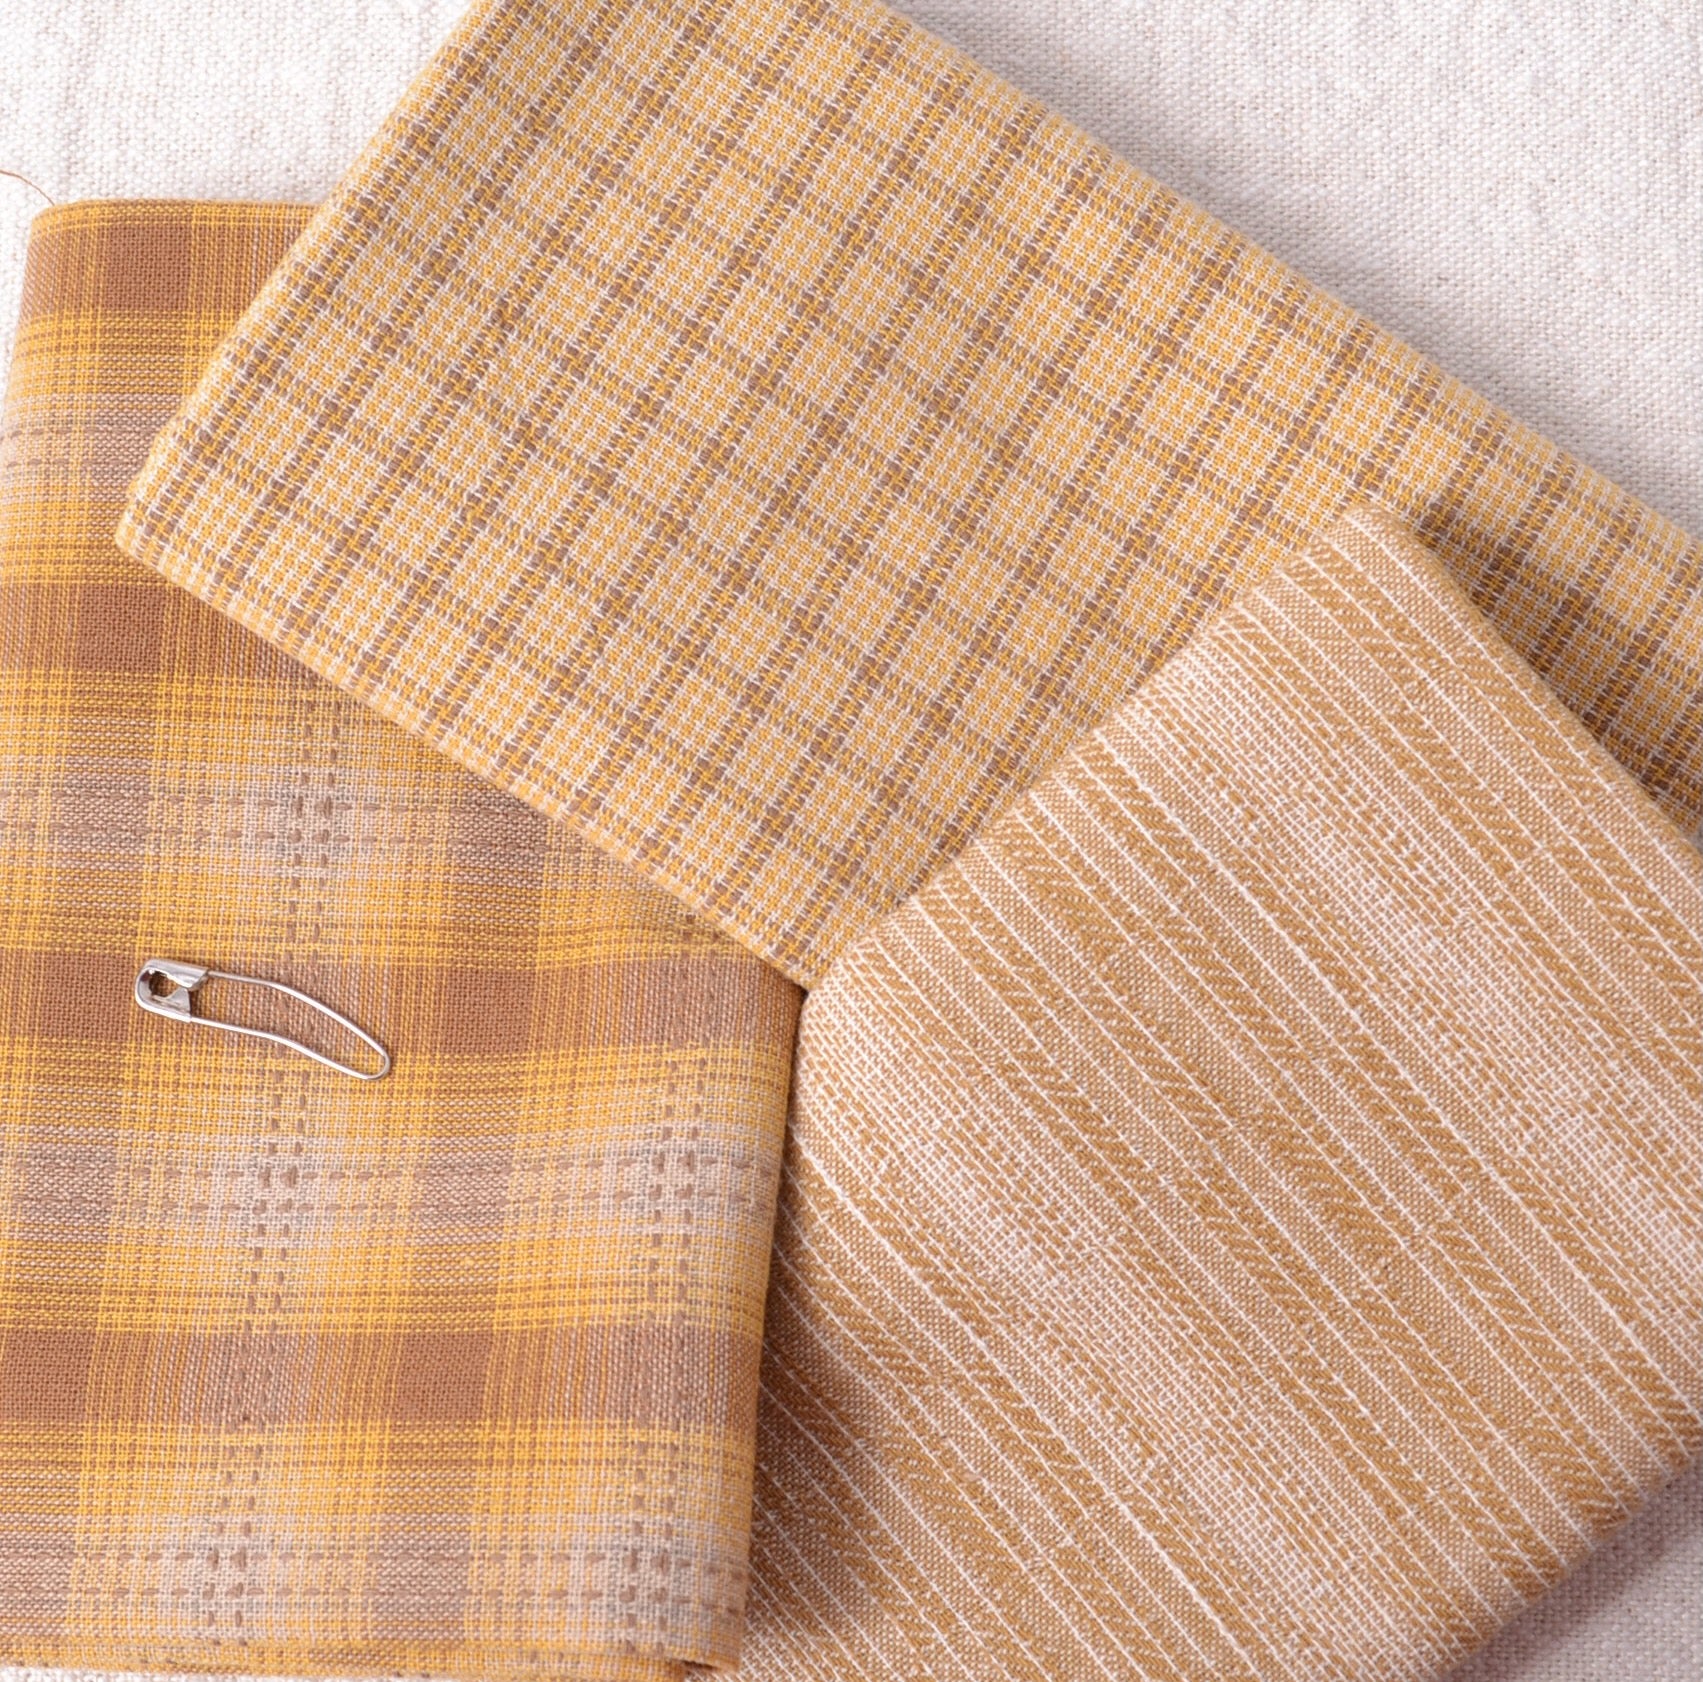 Dyed Yarn Cotton Fabric Bundle of 3, Goldenrod Yellows